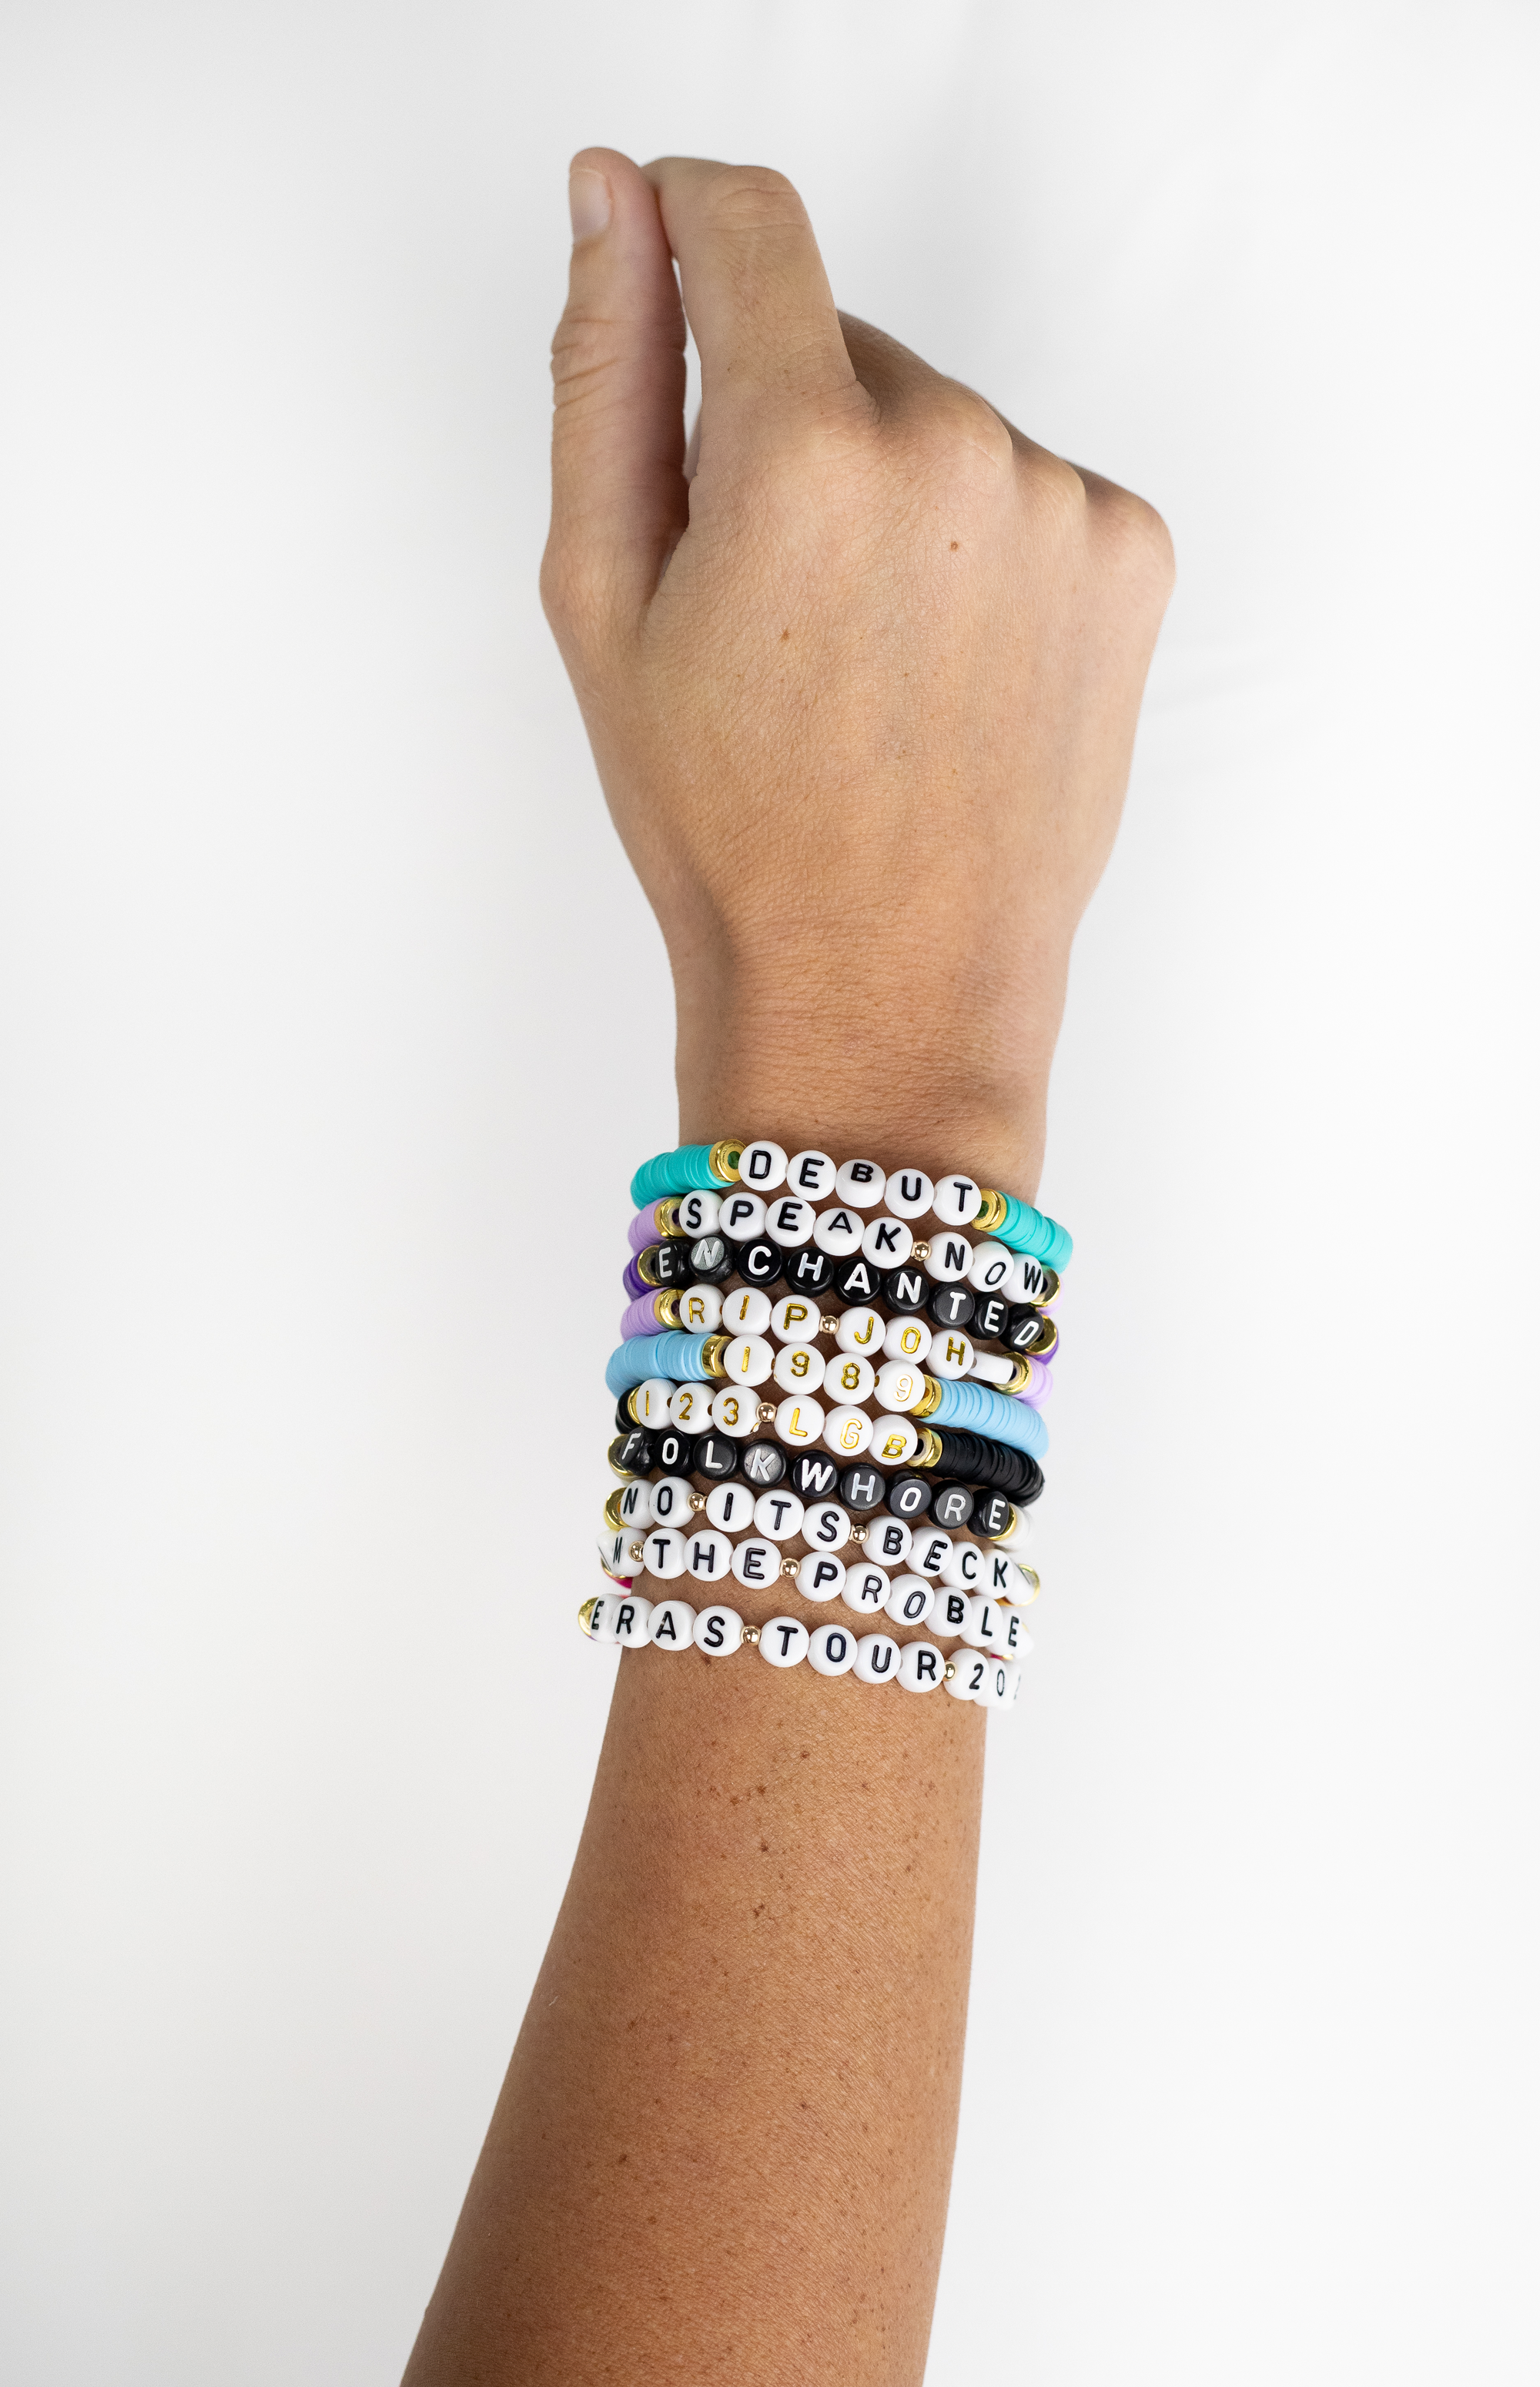 Multi-layer Crystal Boho Beaded Bracelets Set Bangle Women Party Gift | eBay